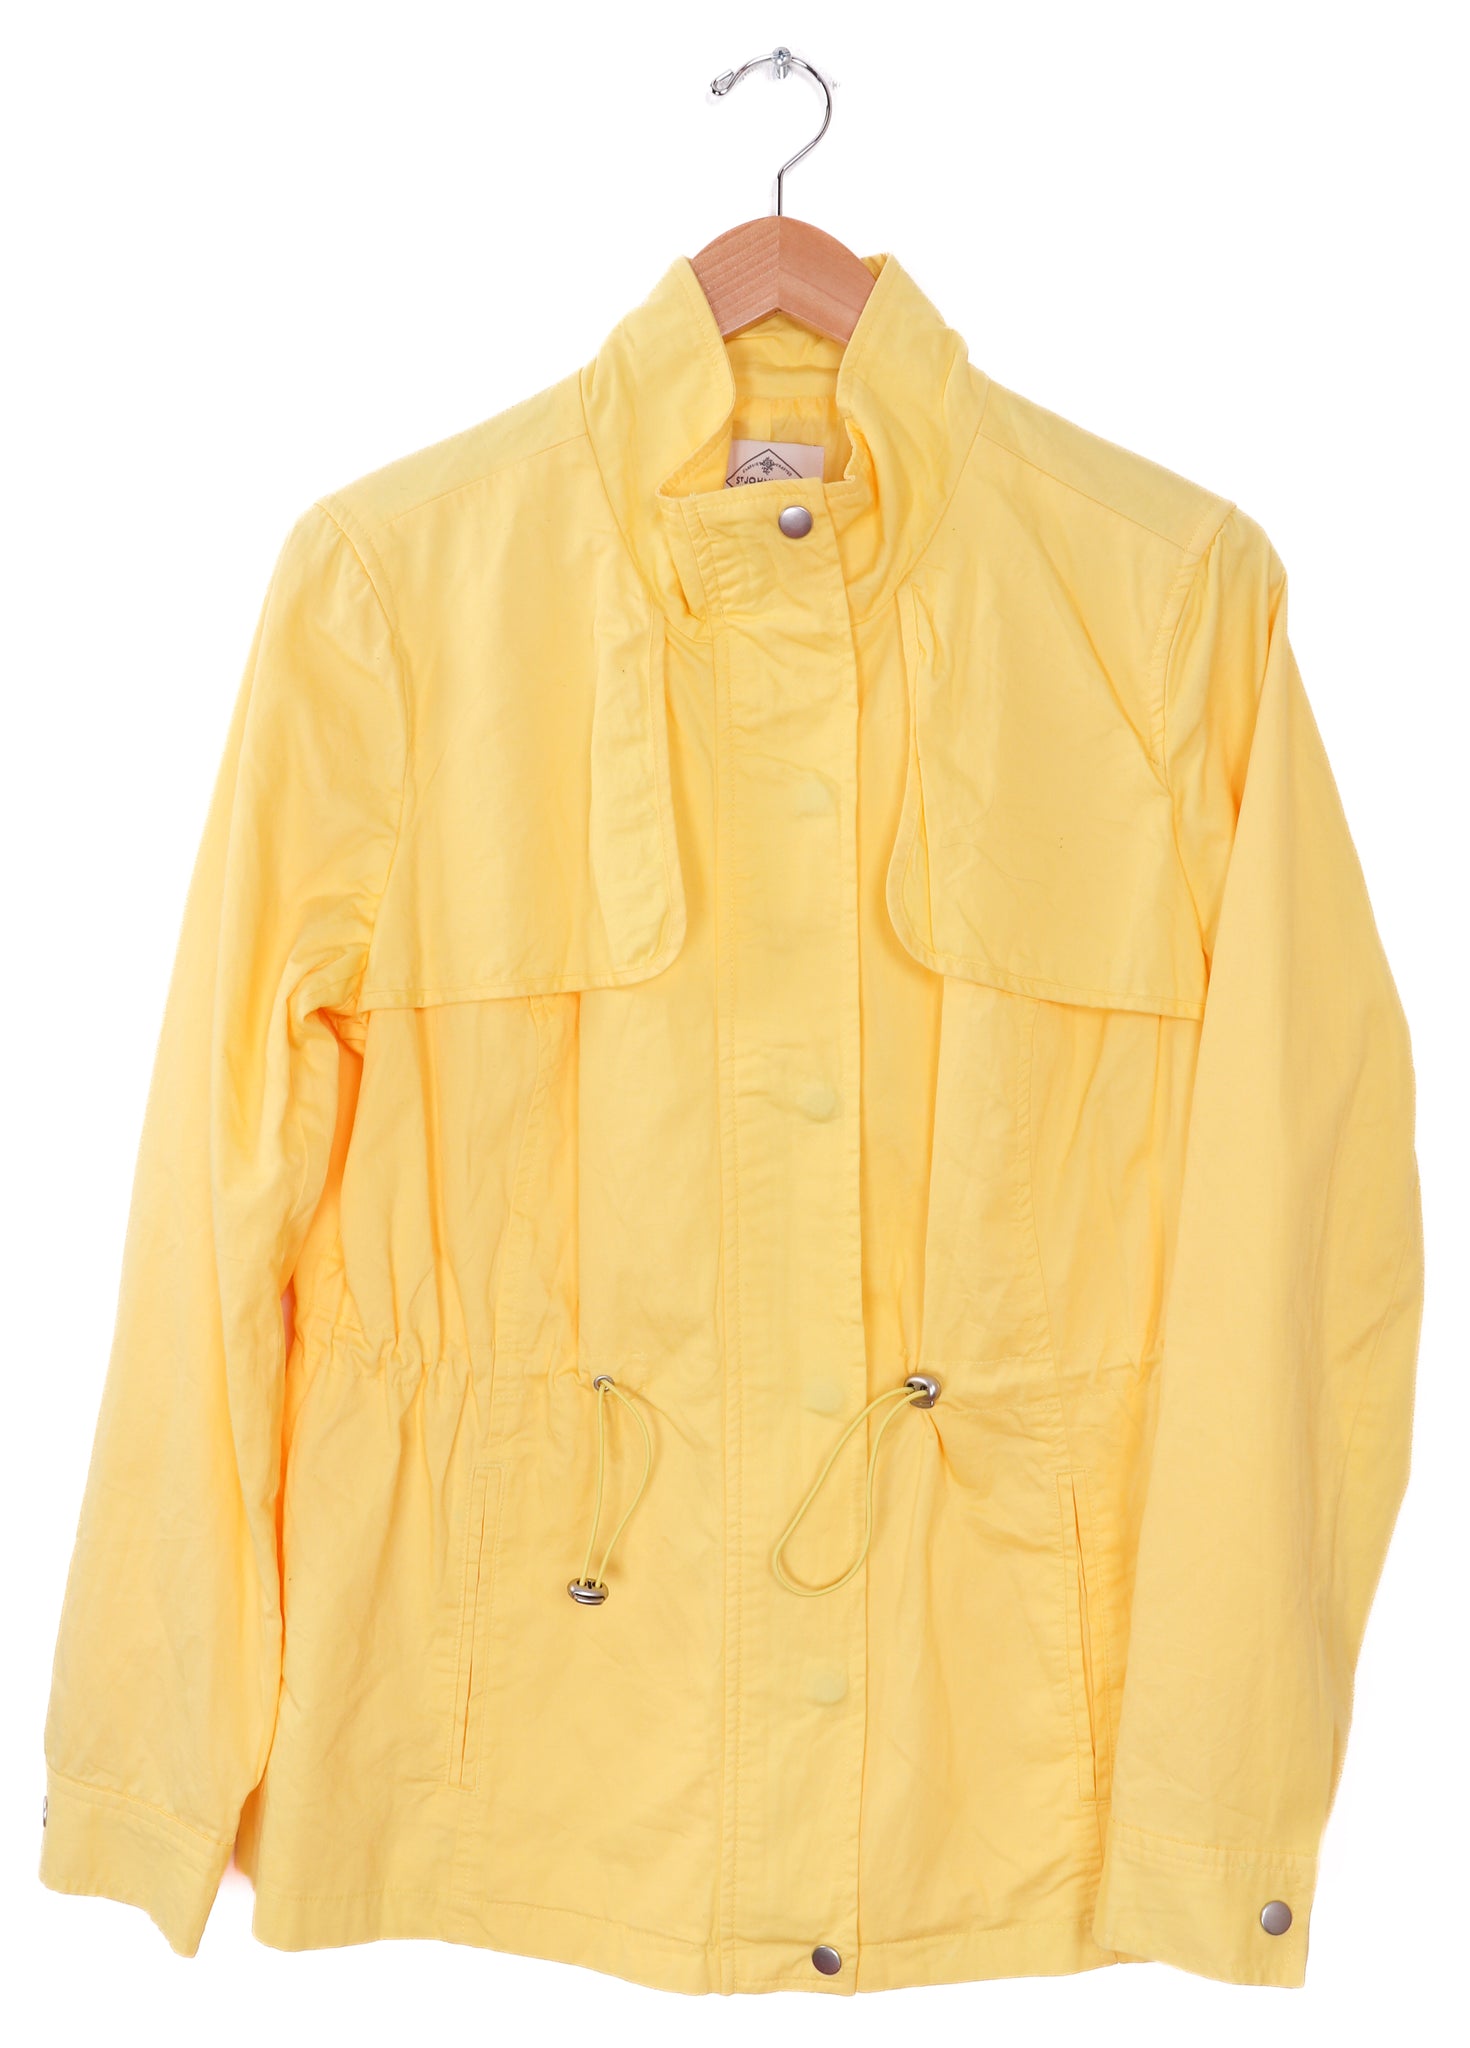 St. Johns Bay Bright and Yellow Rain Coat Style Jacket